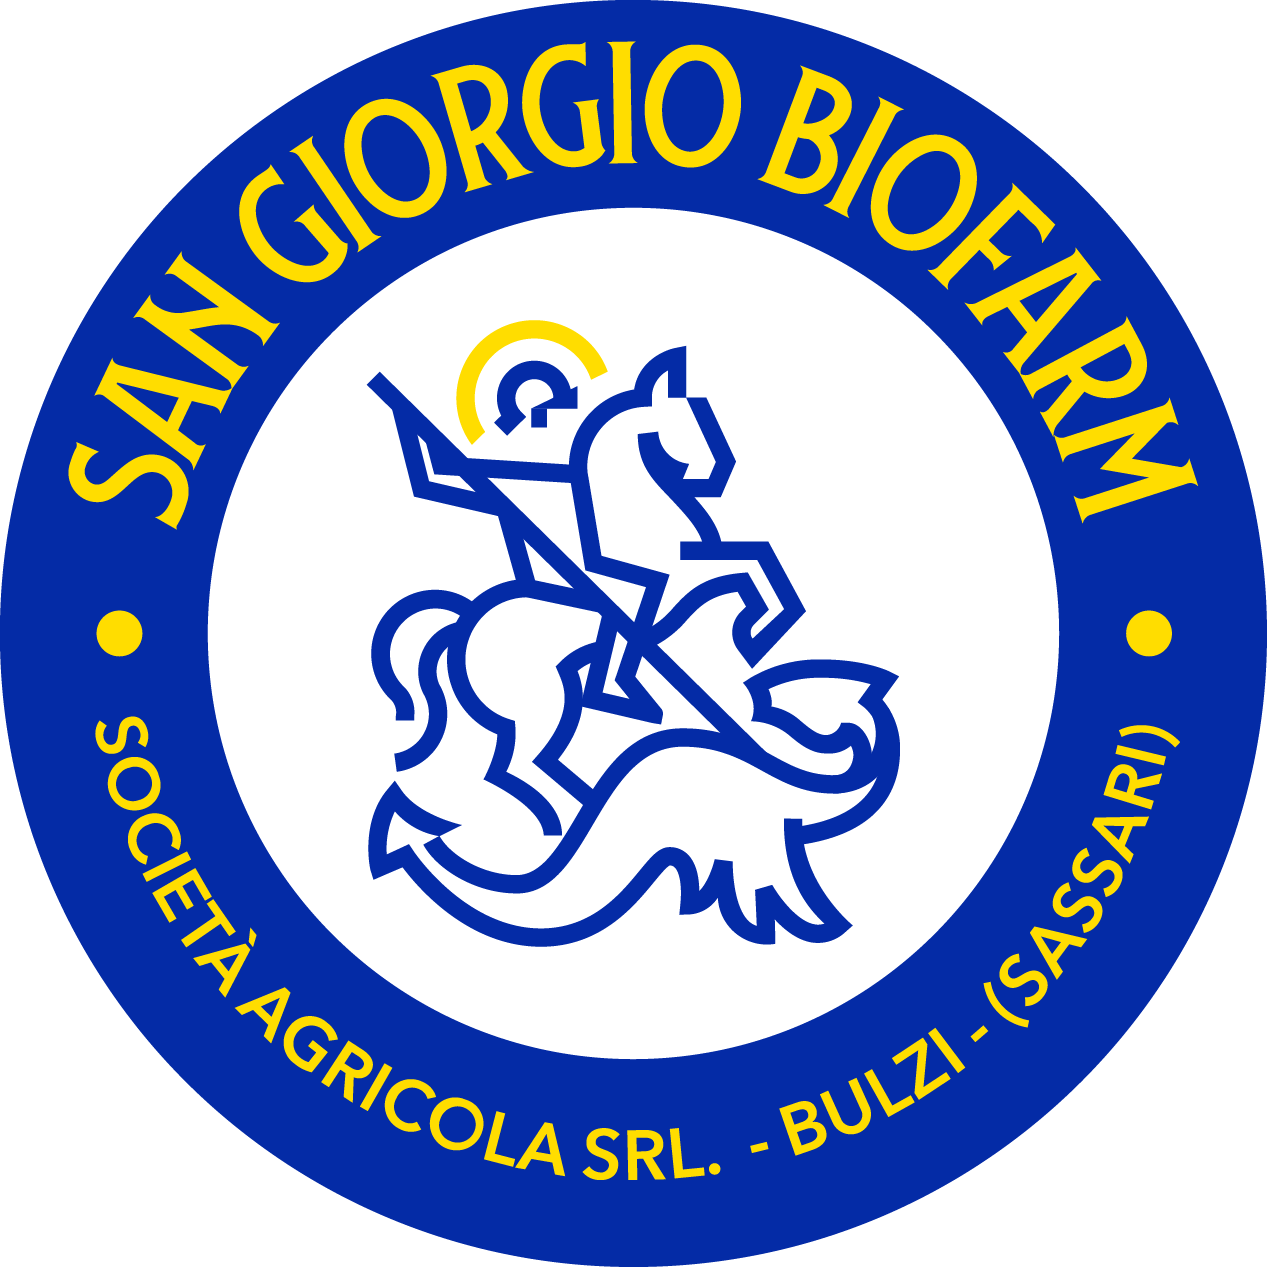 San Giorgio BioFarm - società agricola